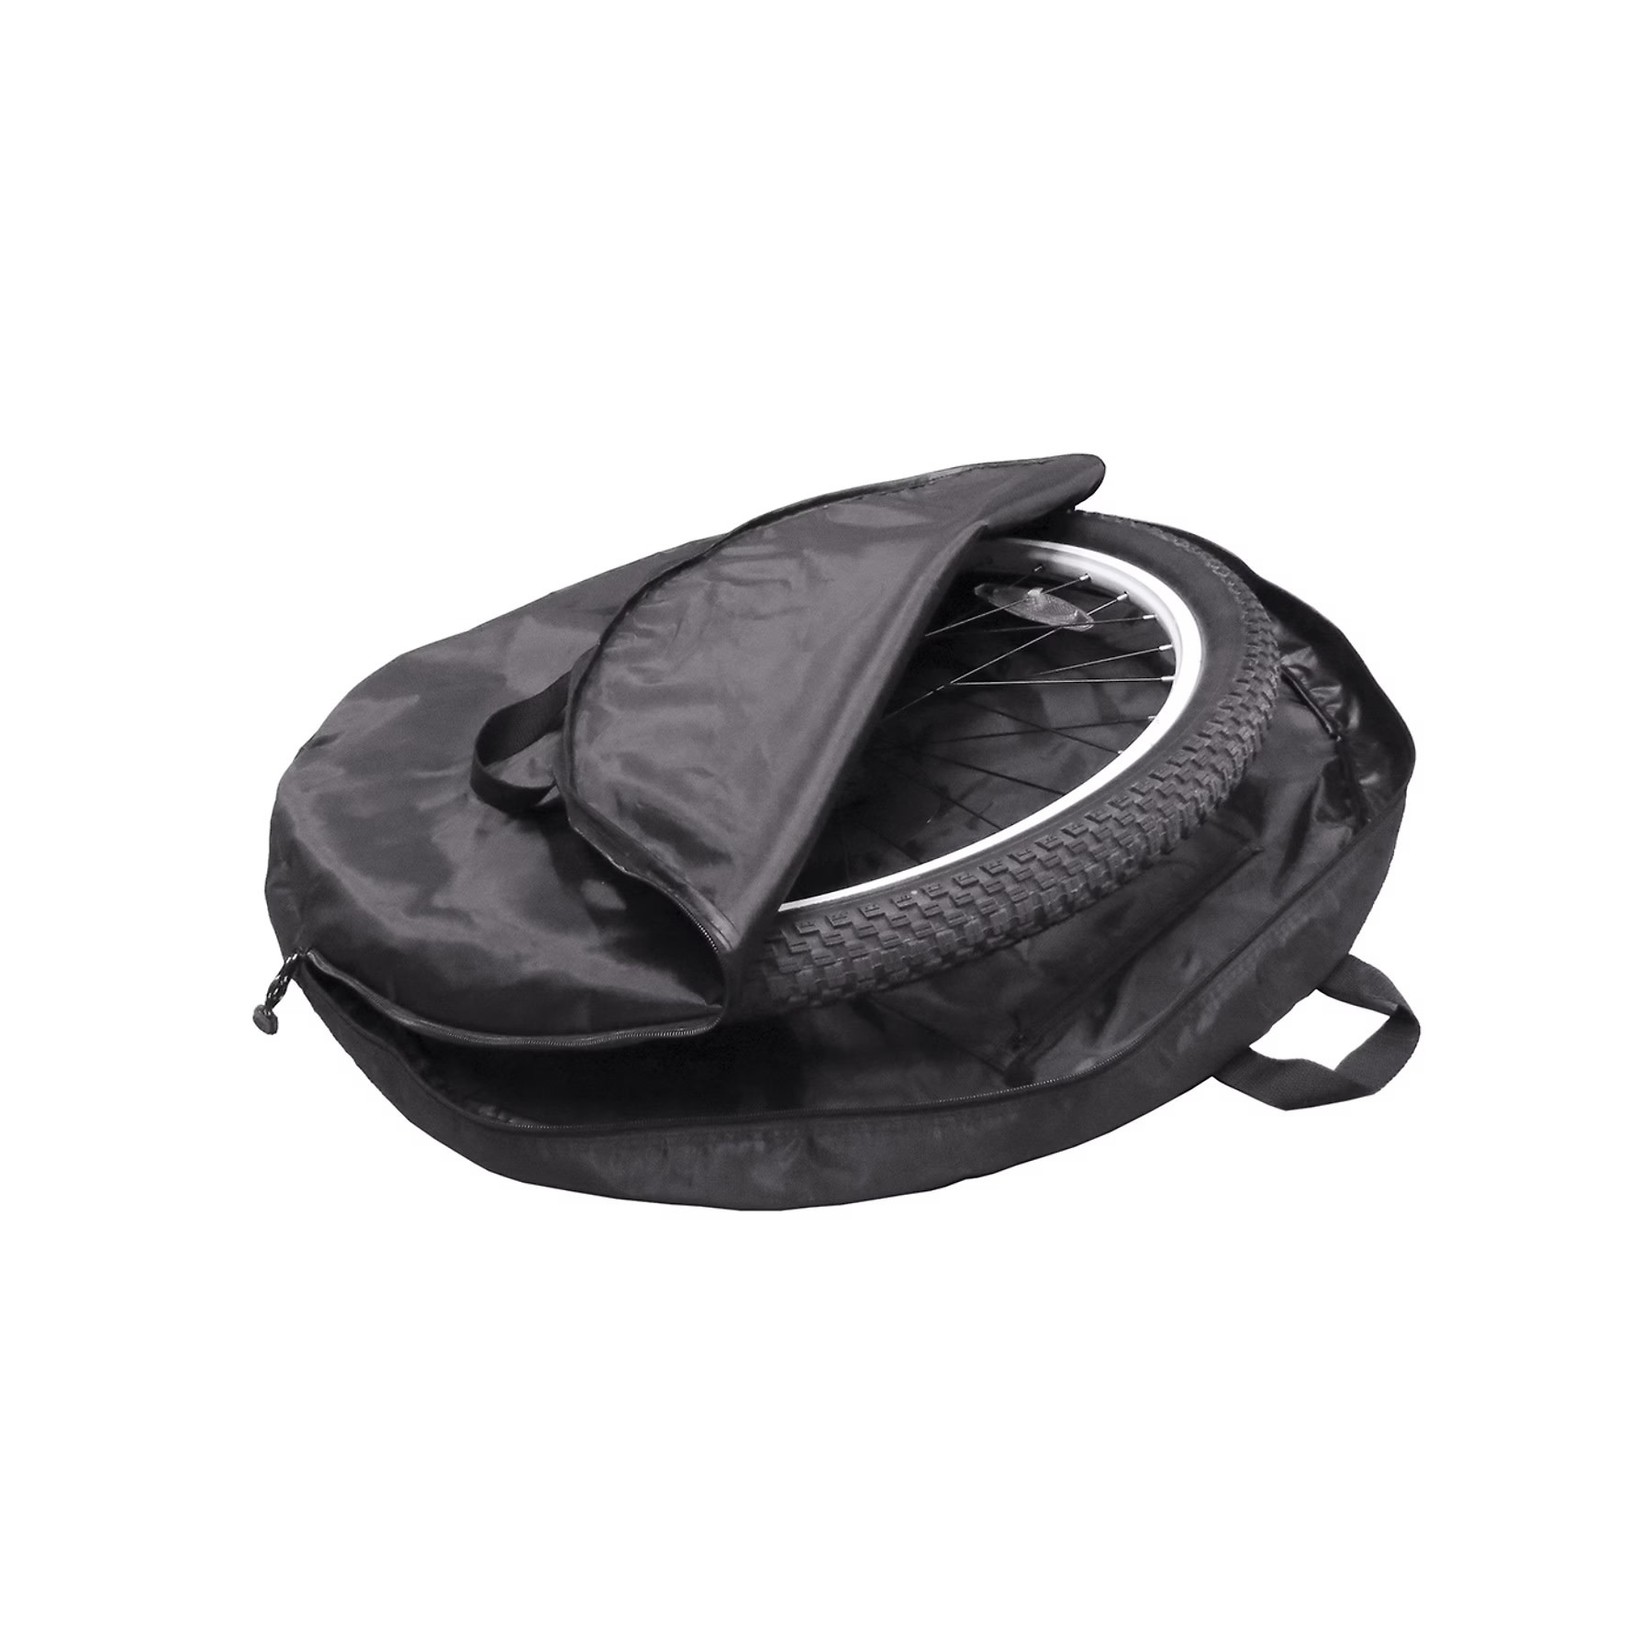 Thule Thule Wheel Bag XL 563000 - Black